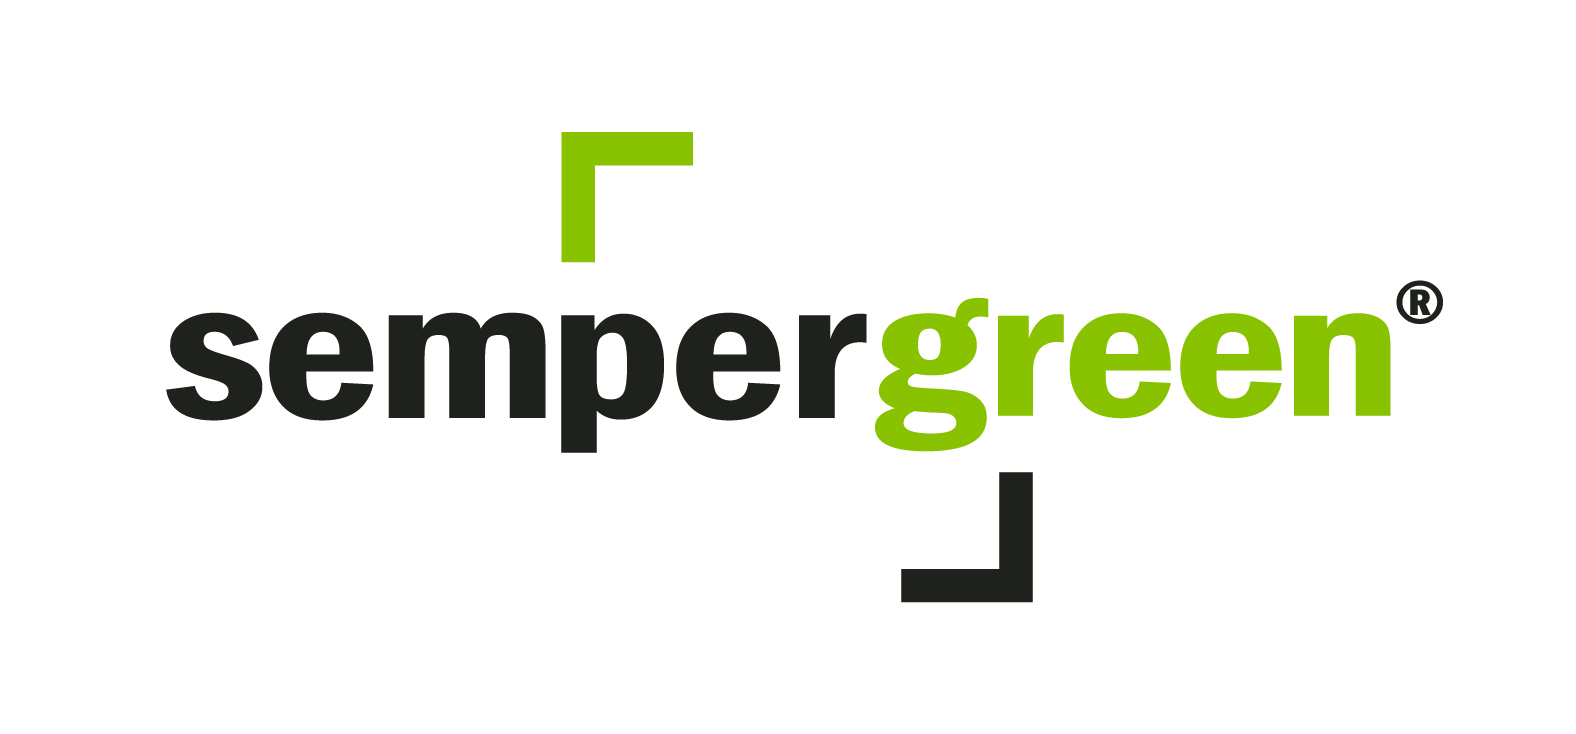 Sempergreen